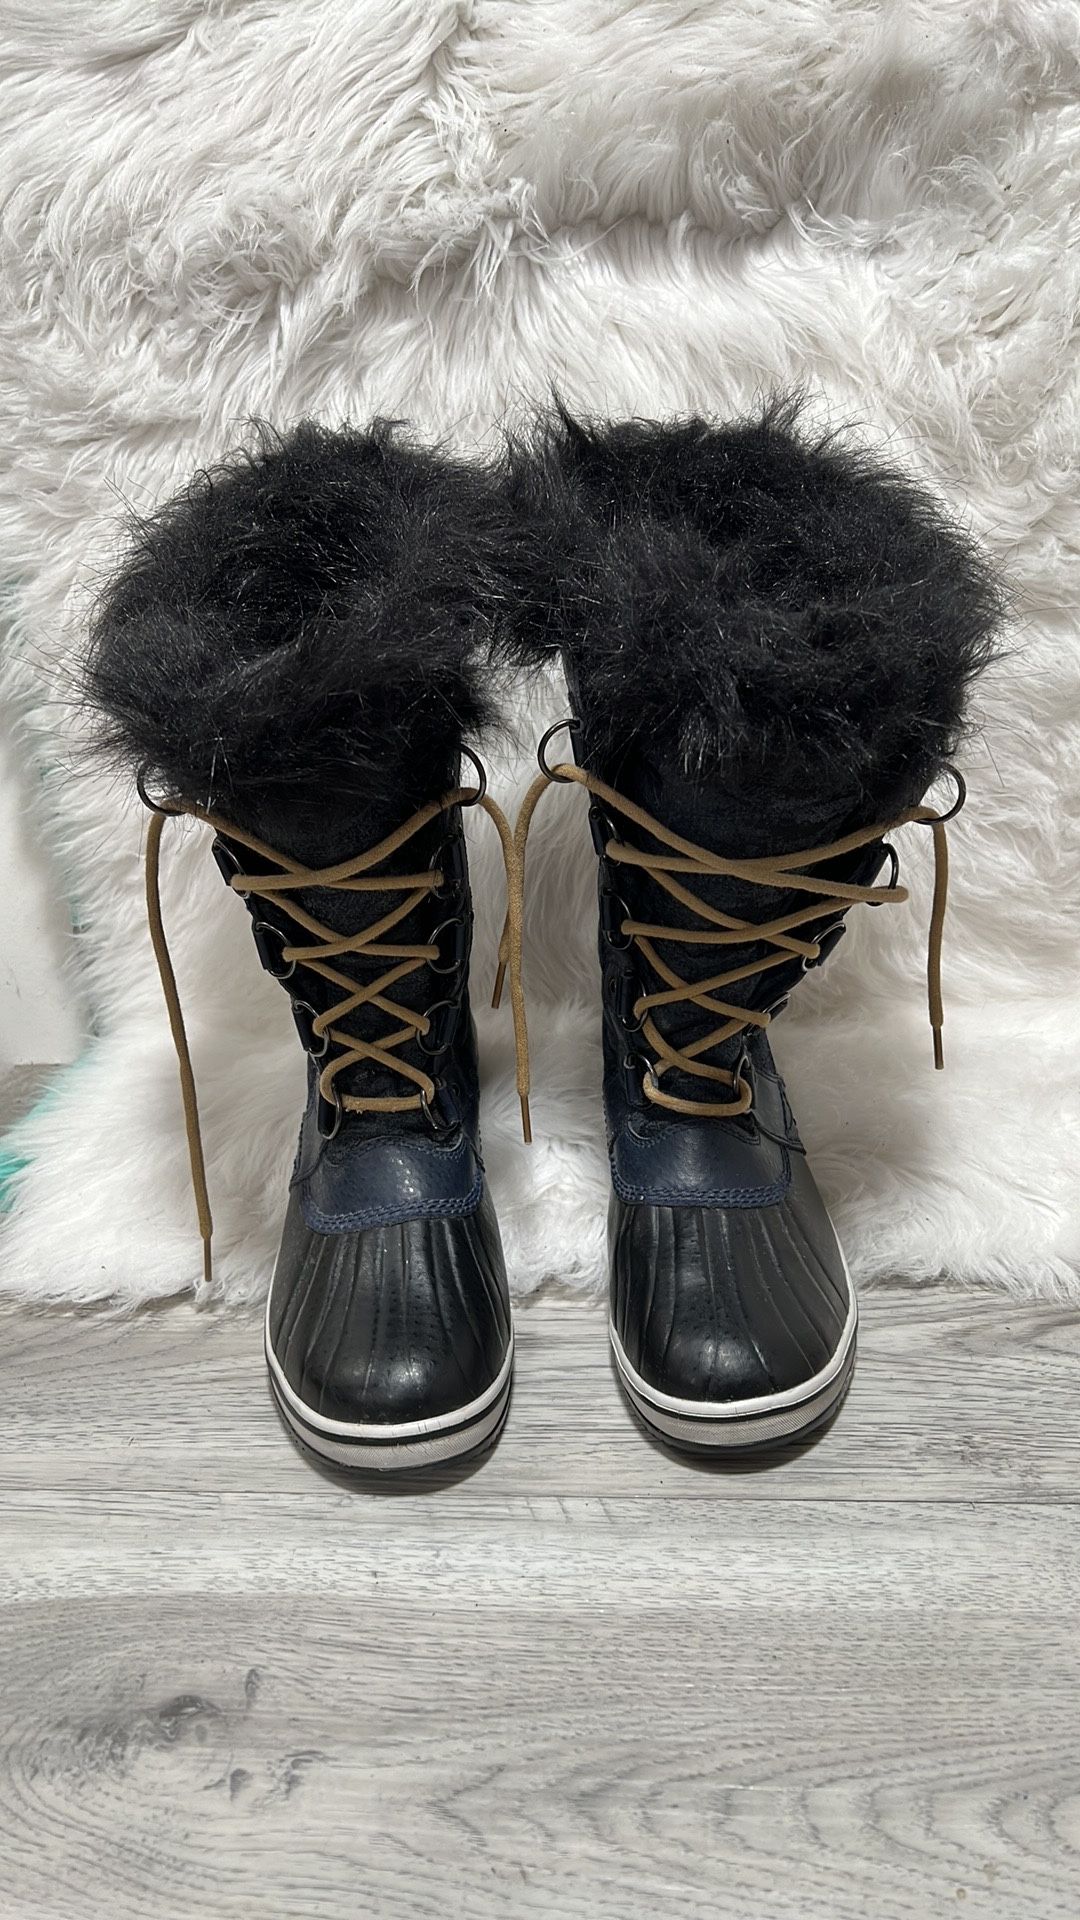 Sorel Tofino II Women's 8.5 Winter Snow Boots Blue Black NL2584 464 Waterproof